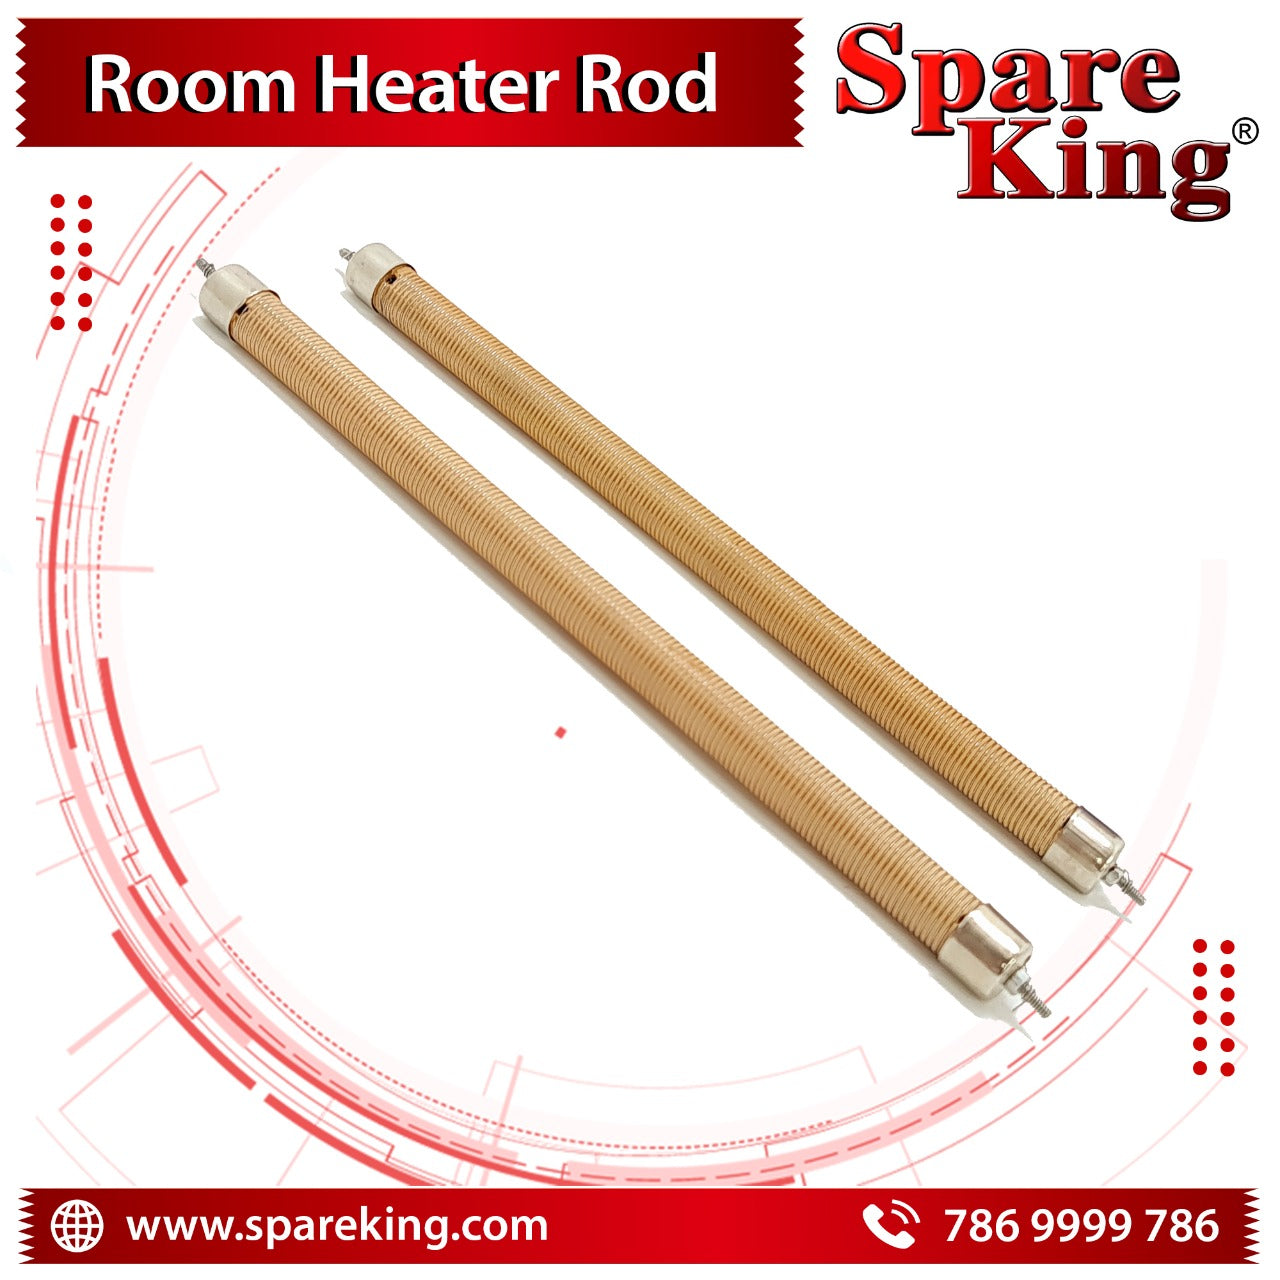 Room Heater Rod (Pack of 12 pcs)